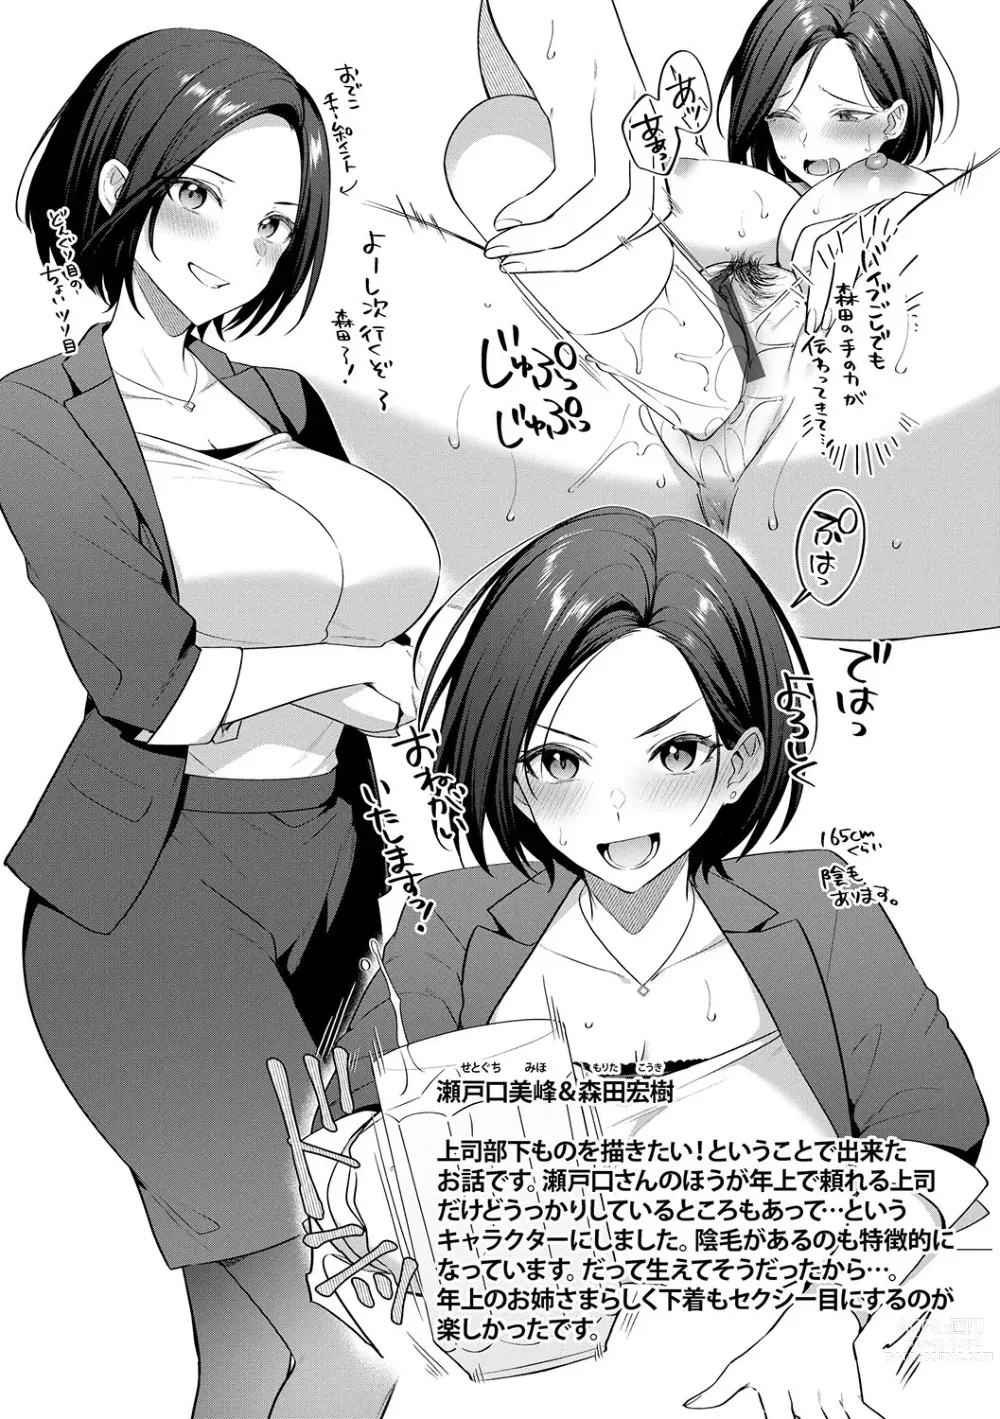 Page 236 of manga Tsubomi Zakari +  Digital Tokusouban  Gentai Tokuten  Character Settei Shuu & Raugh Shuu